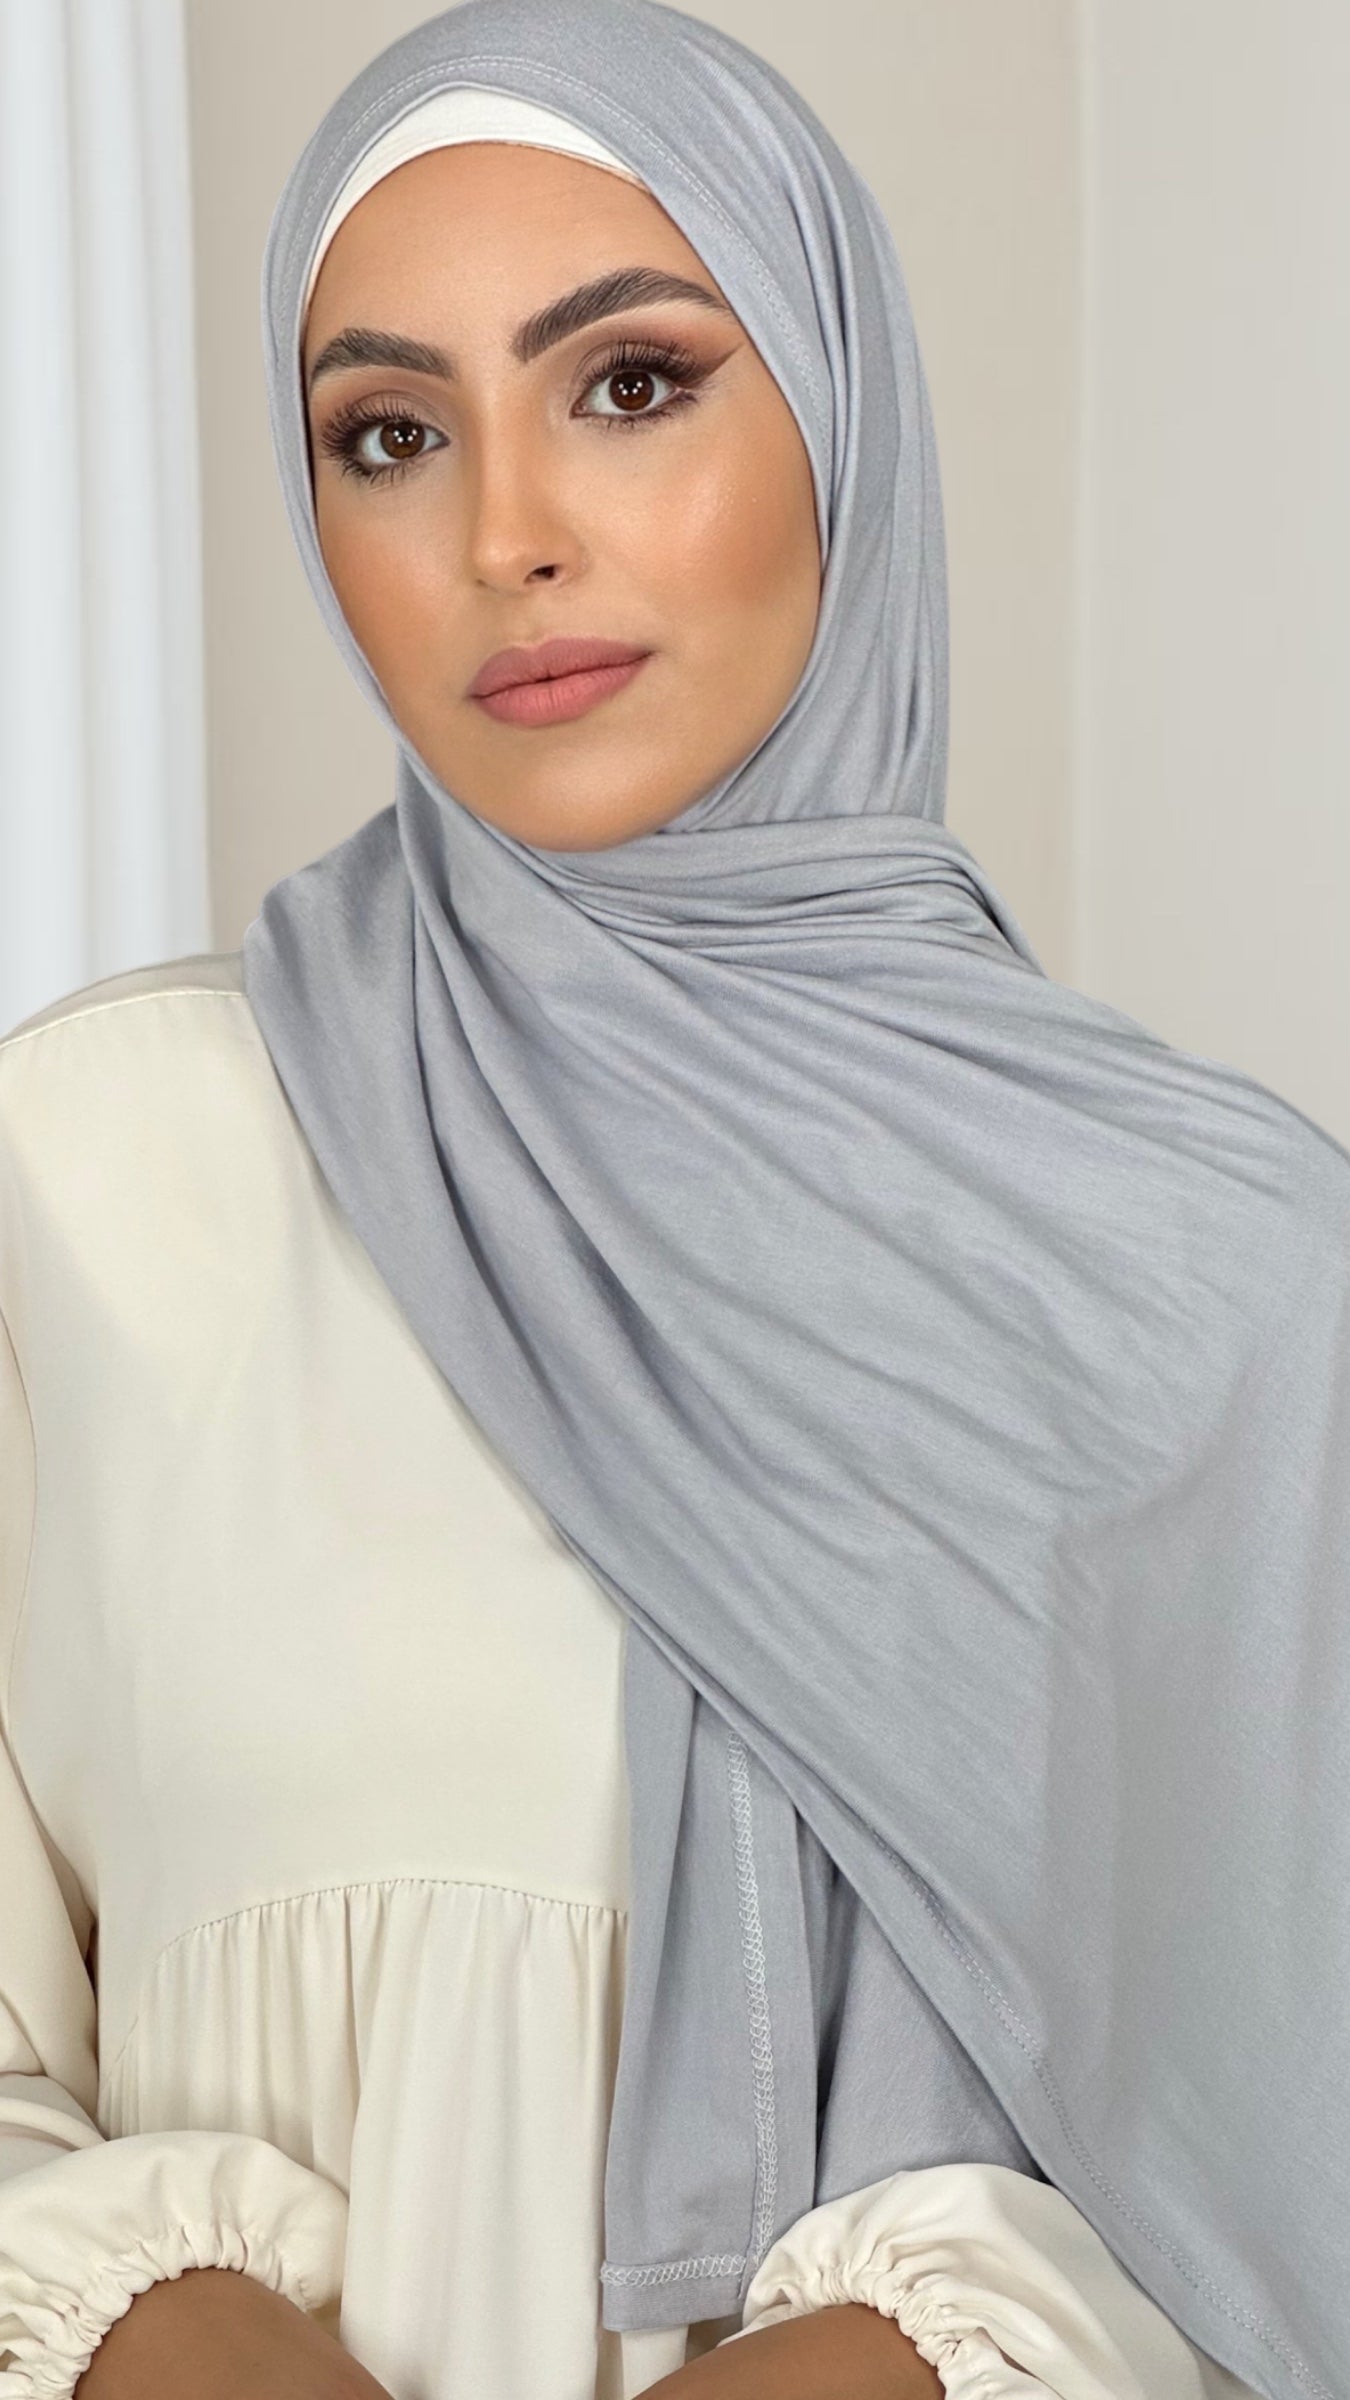 Hijab Jersey Grigio ChiaroHijab, chador, velo, turbante, foulard, copricapo, musulmano, islamico, sciarpa, 